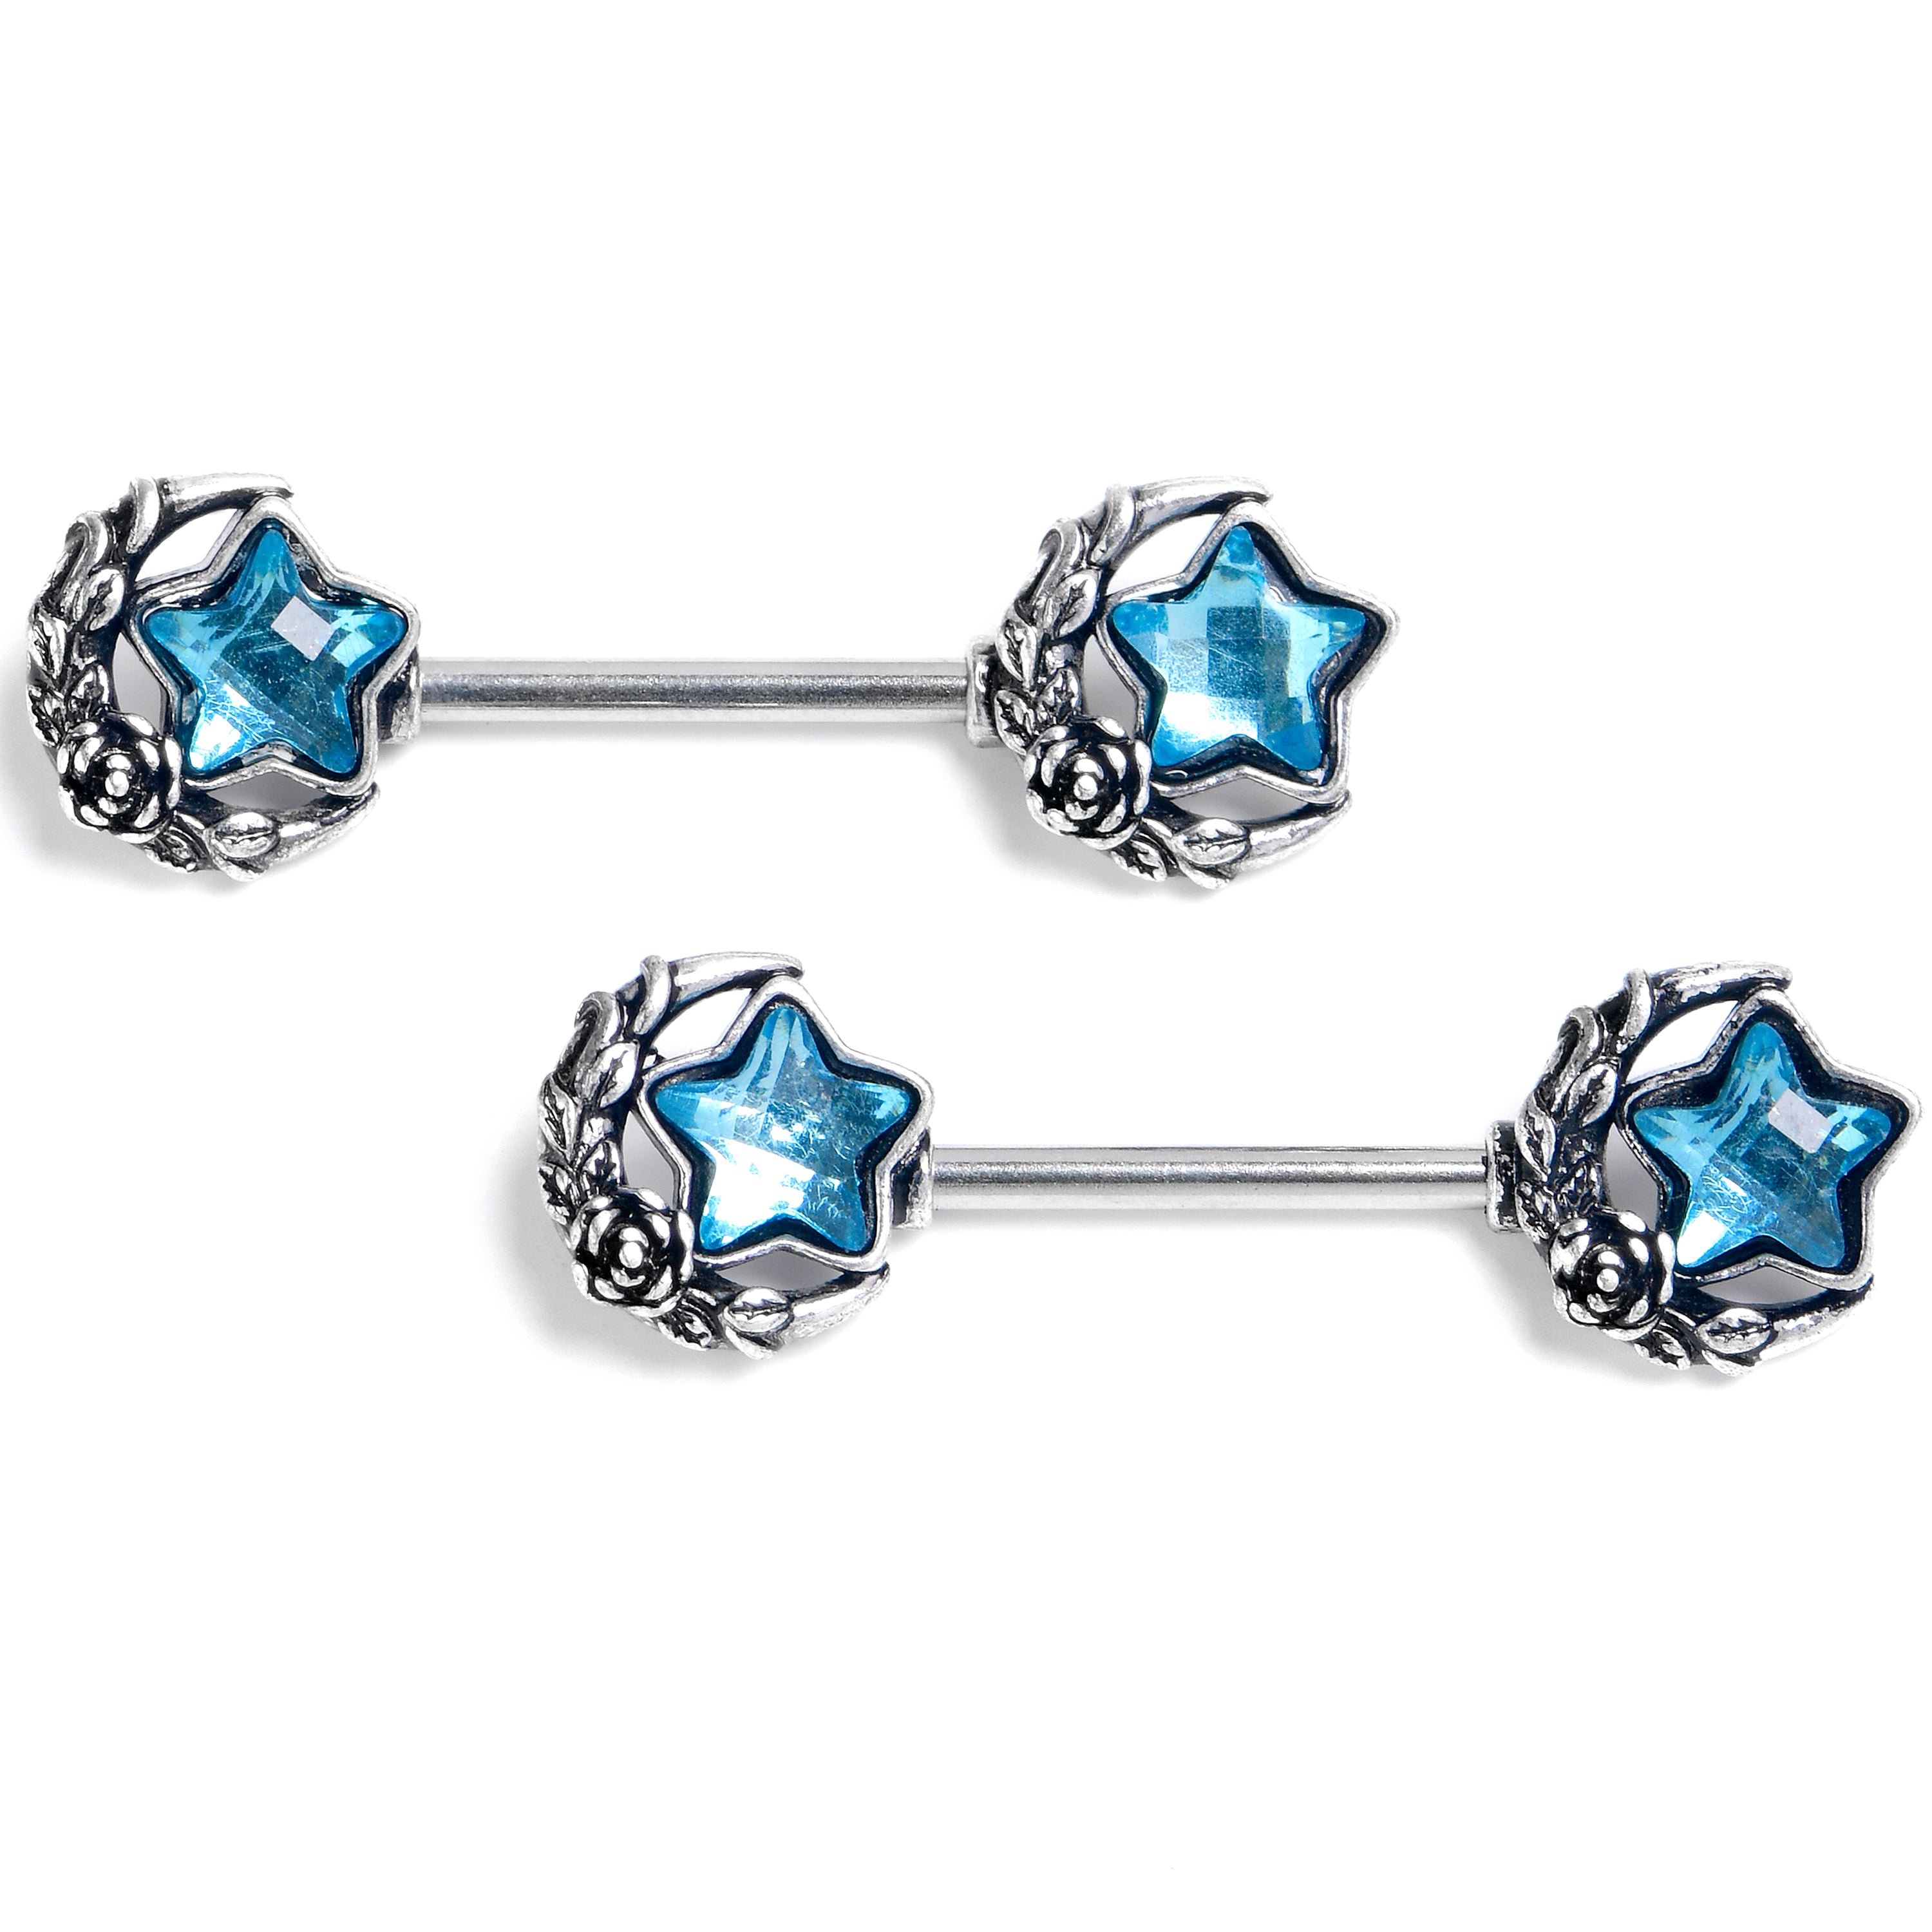 14 Gauge 9/16 Blue Gem Ornate Moon Star Barbell Nipple Ring Set